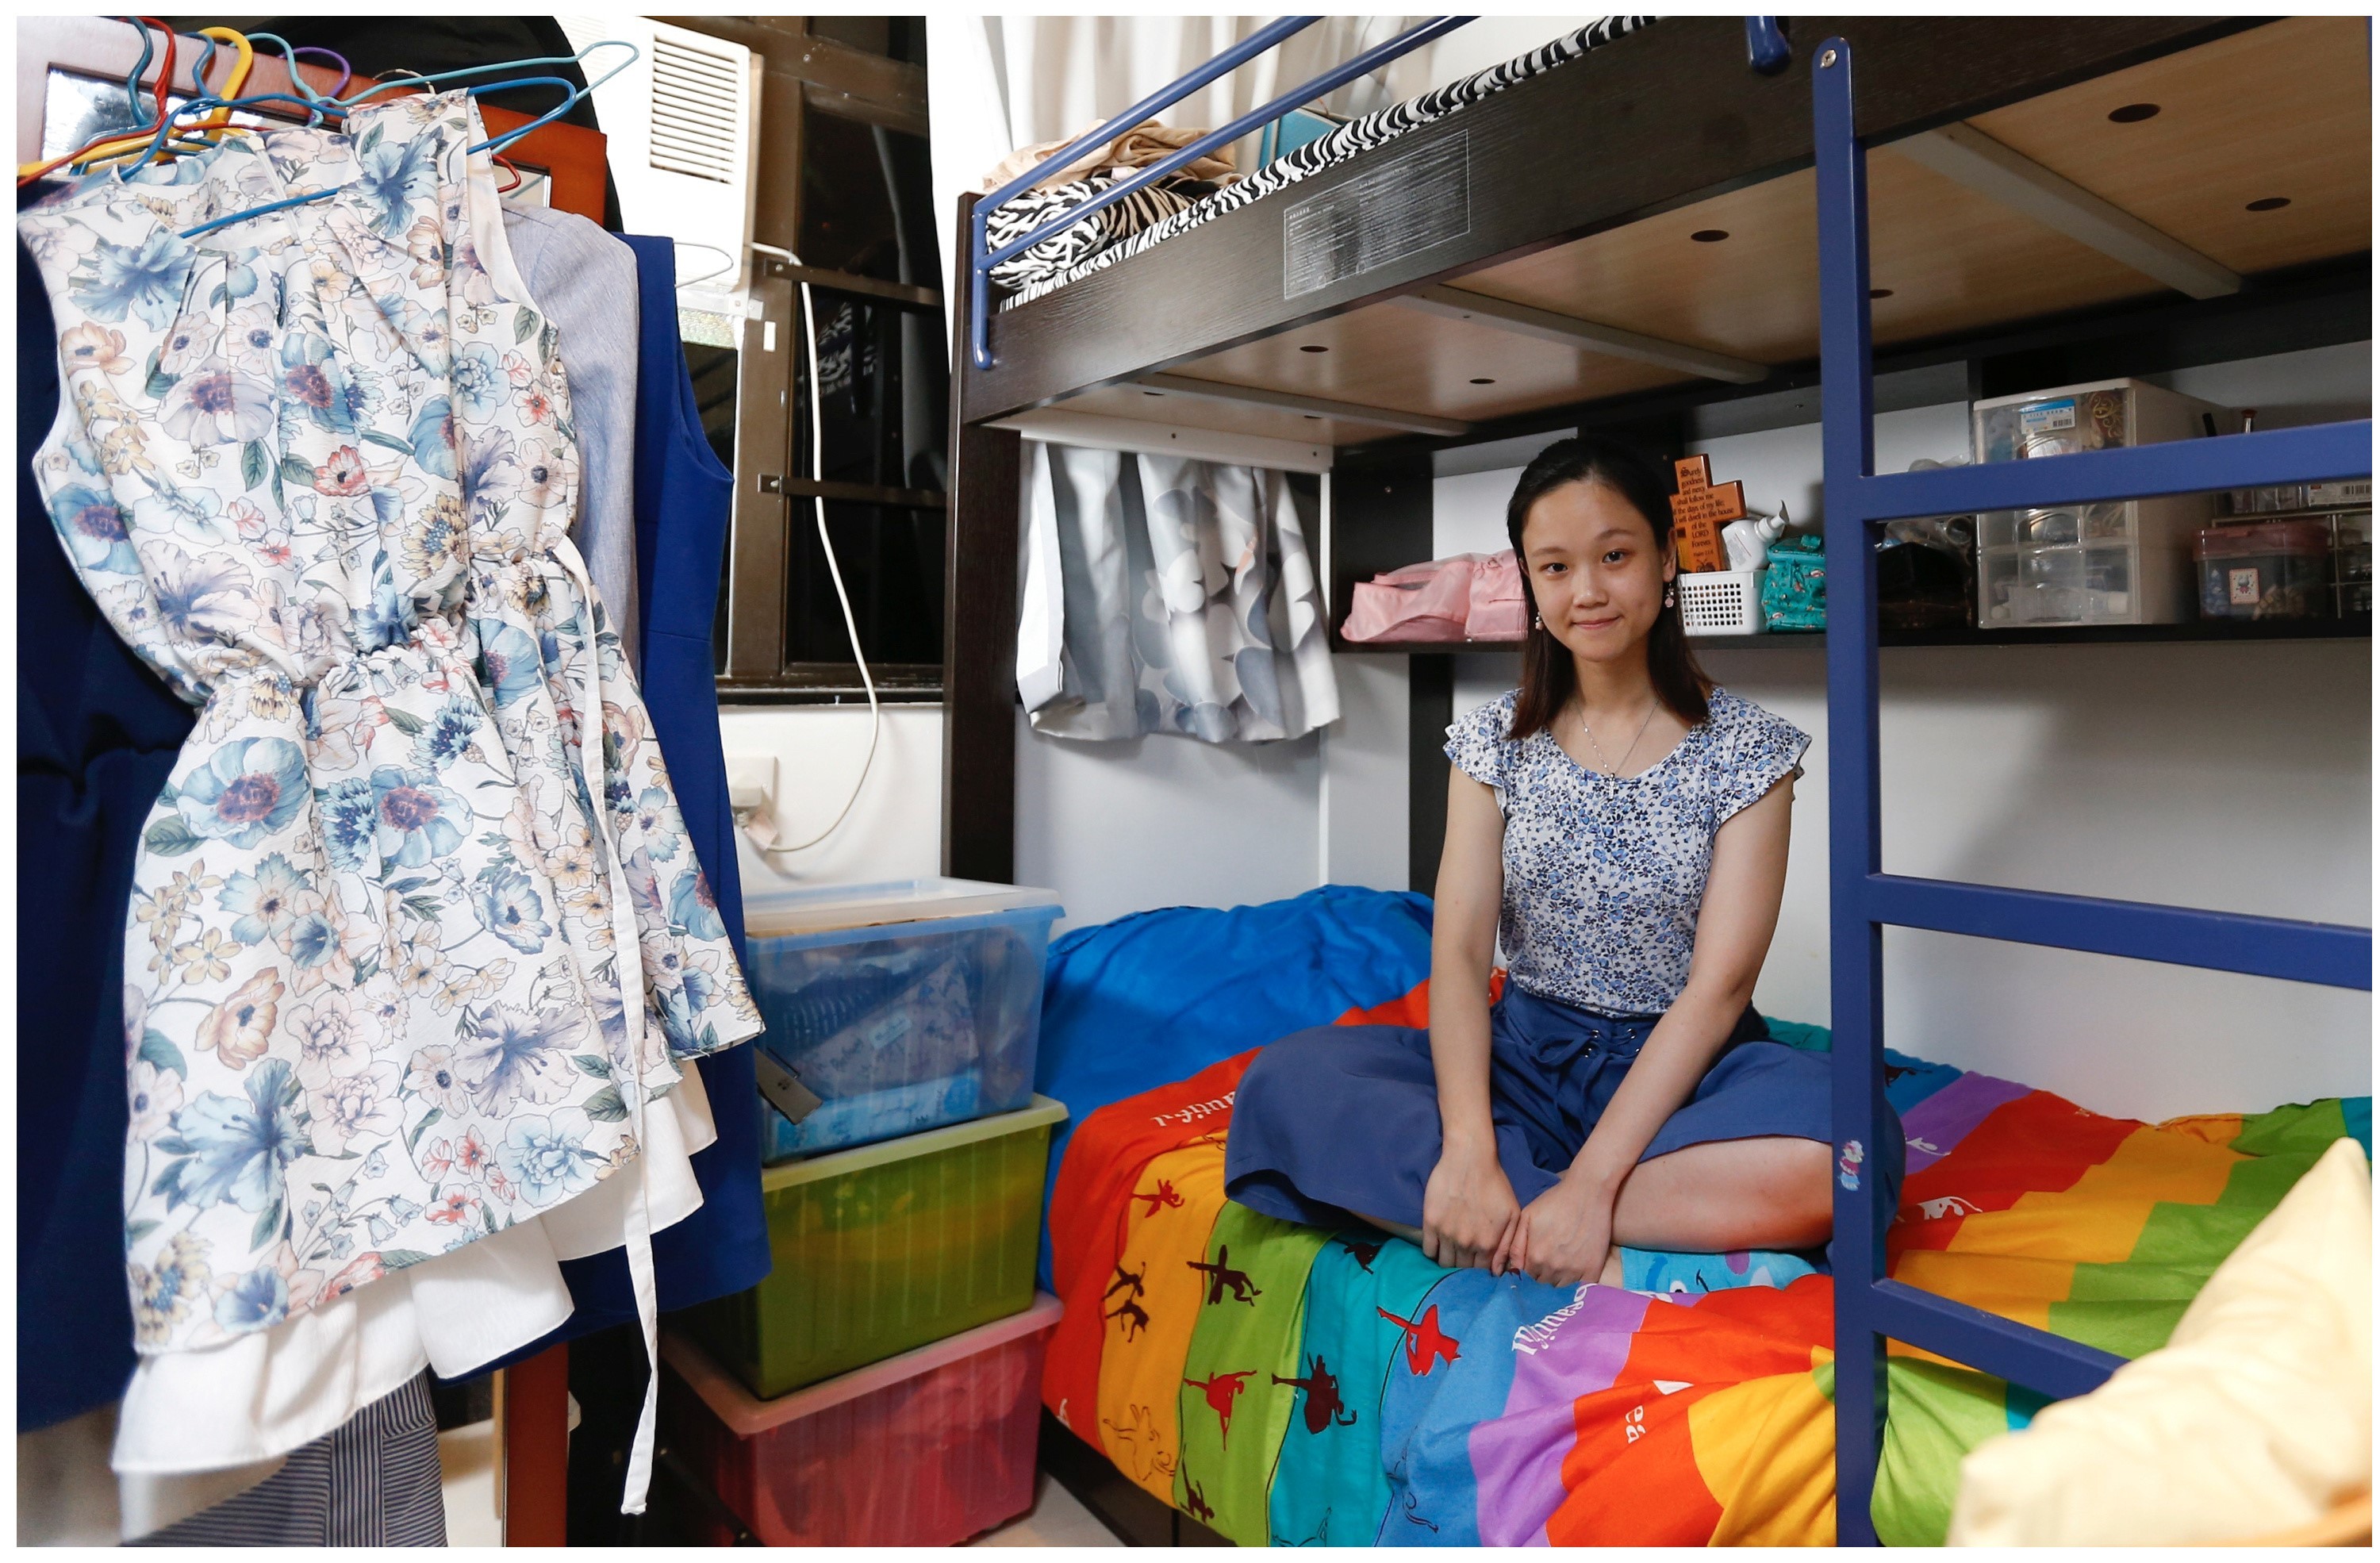 Eunice Wai said life was getting increasingly difficult for Hongkongers. Photo: Thomas Peter / Reuters